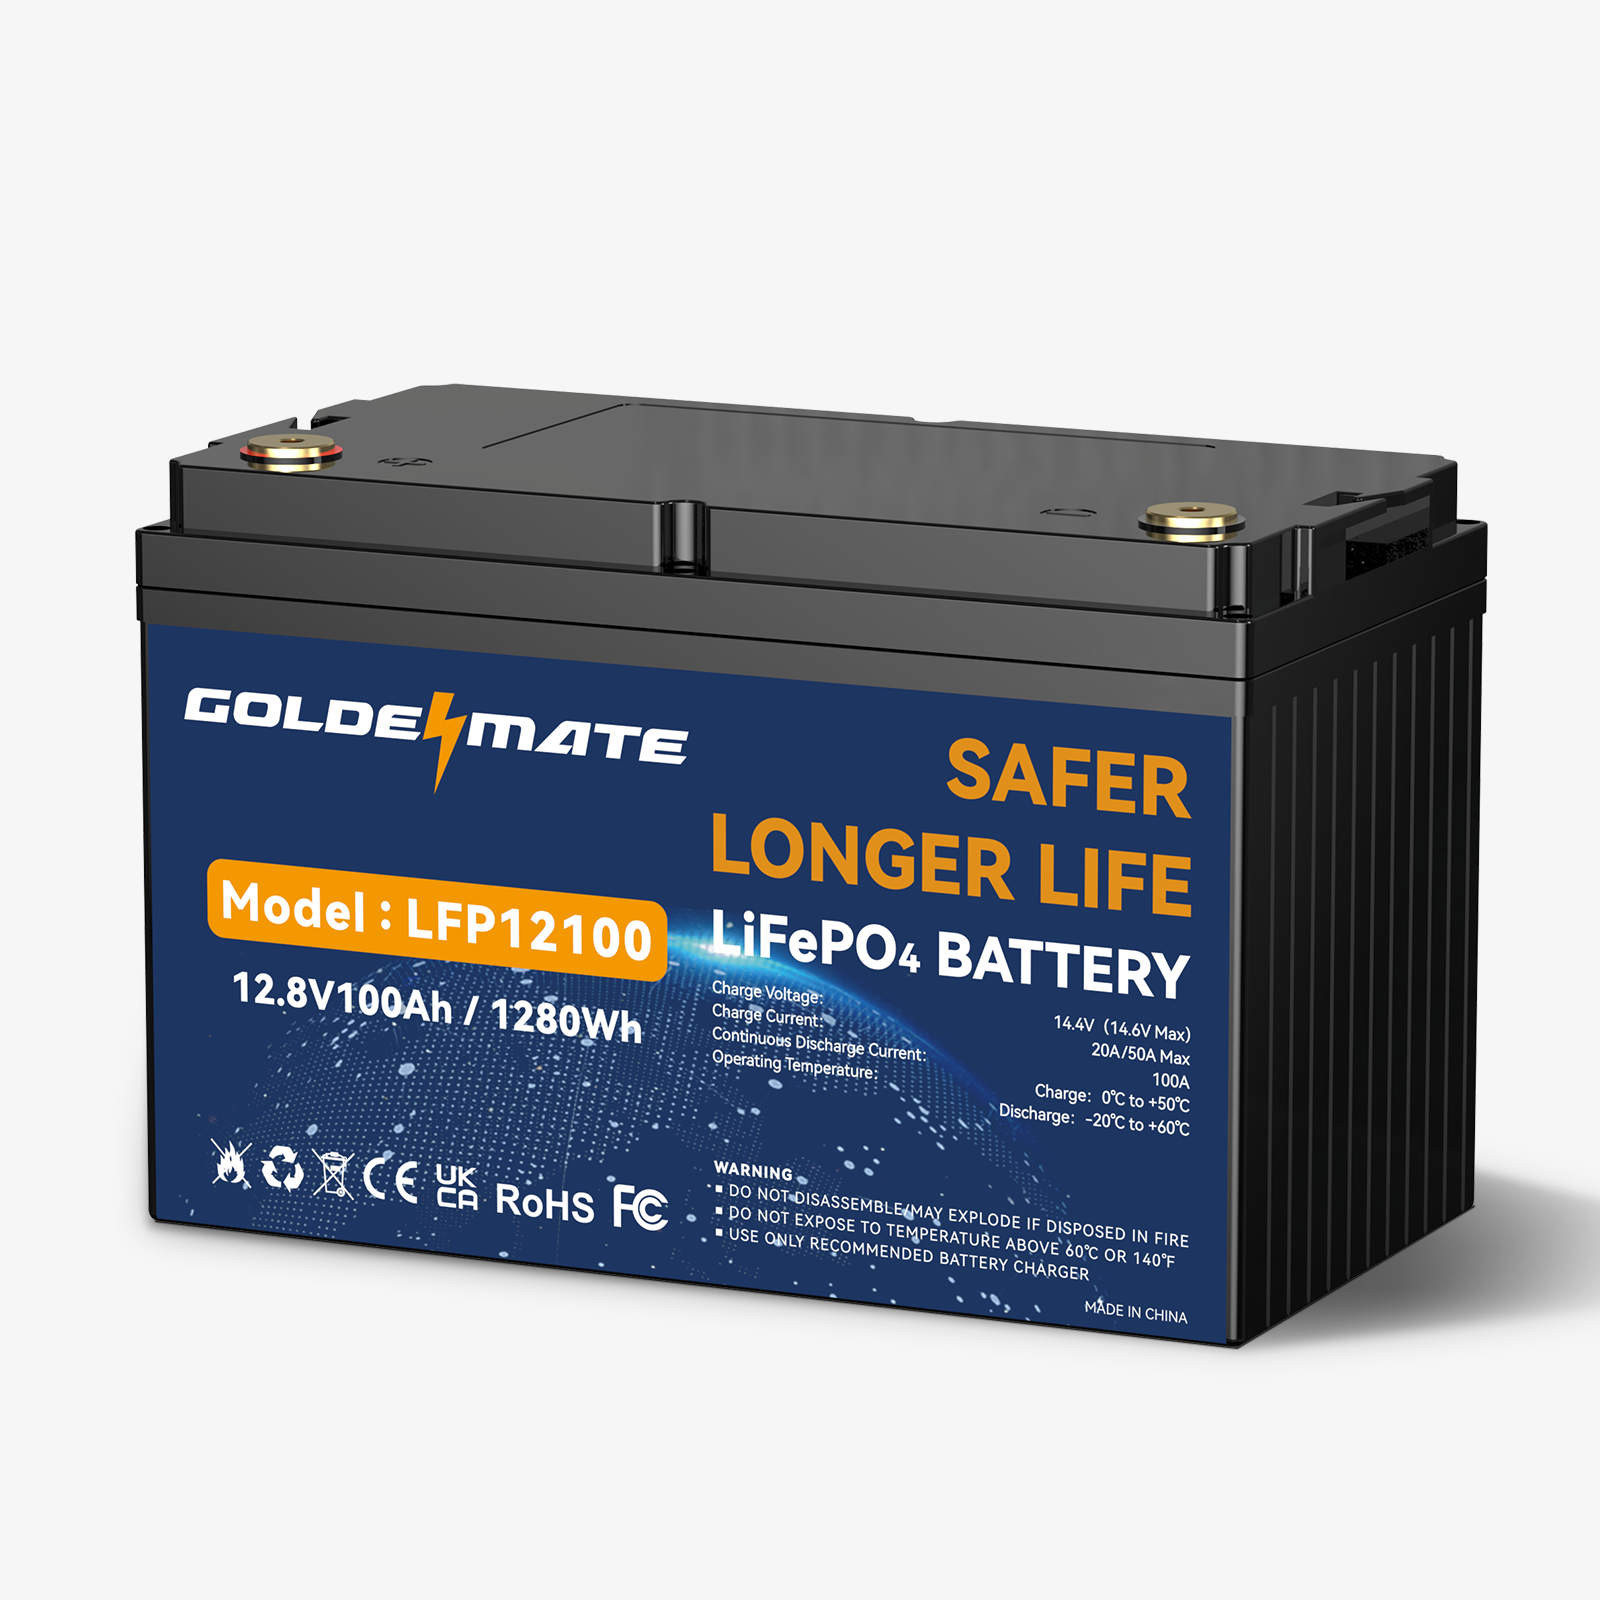 GoldenMate 12V 100Ah Group 24 LiFePO4 Lithium Battery, 1280Wh Energy, Built-In BMS